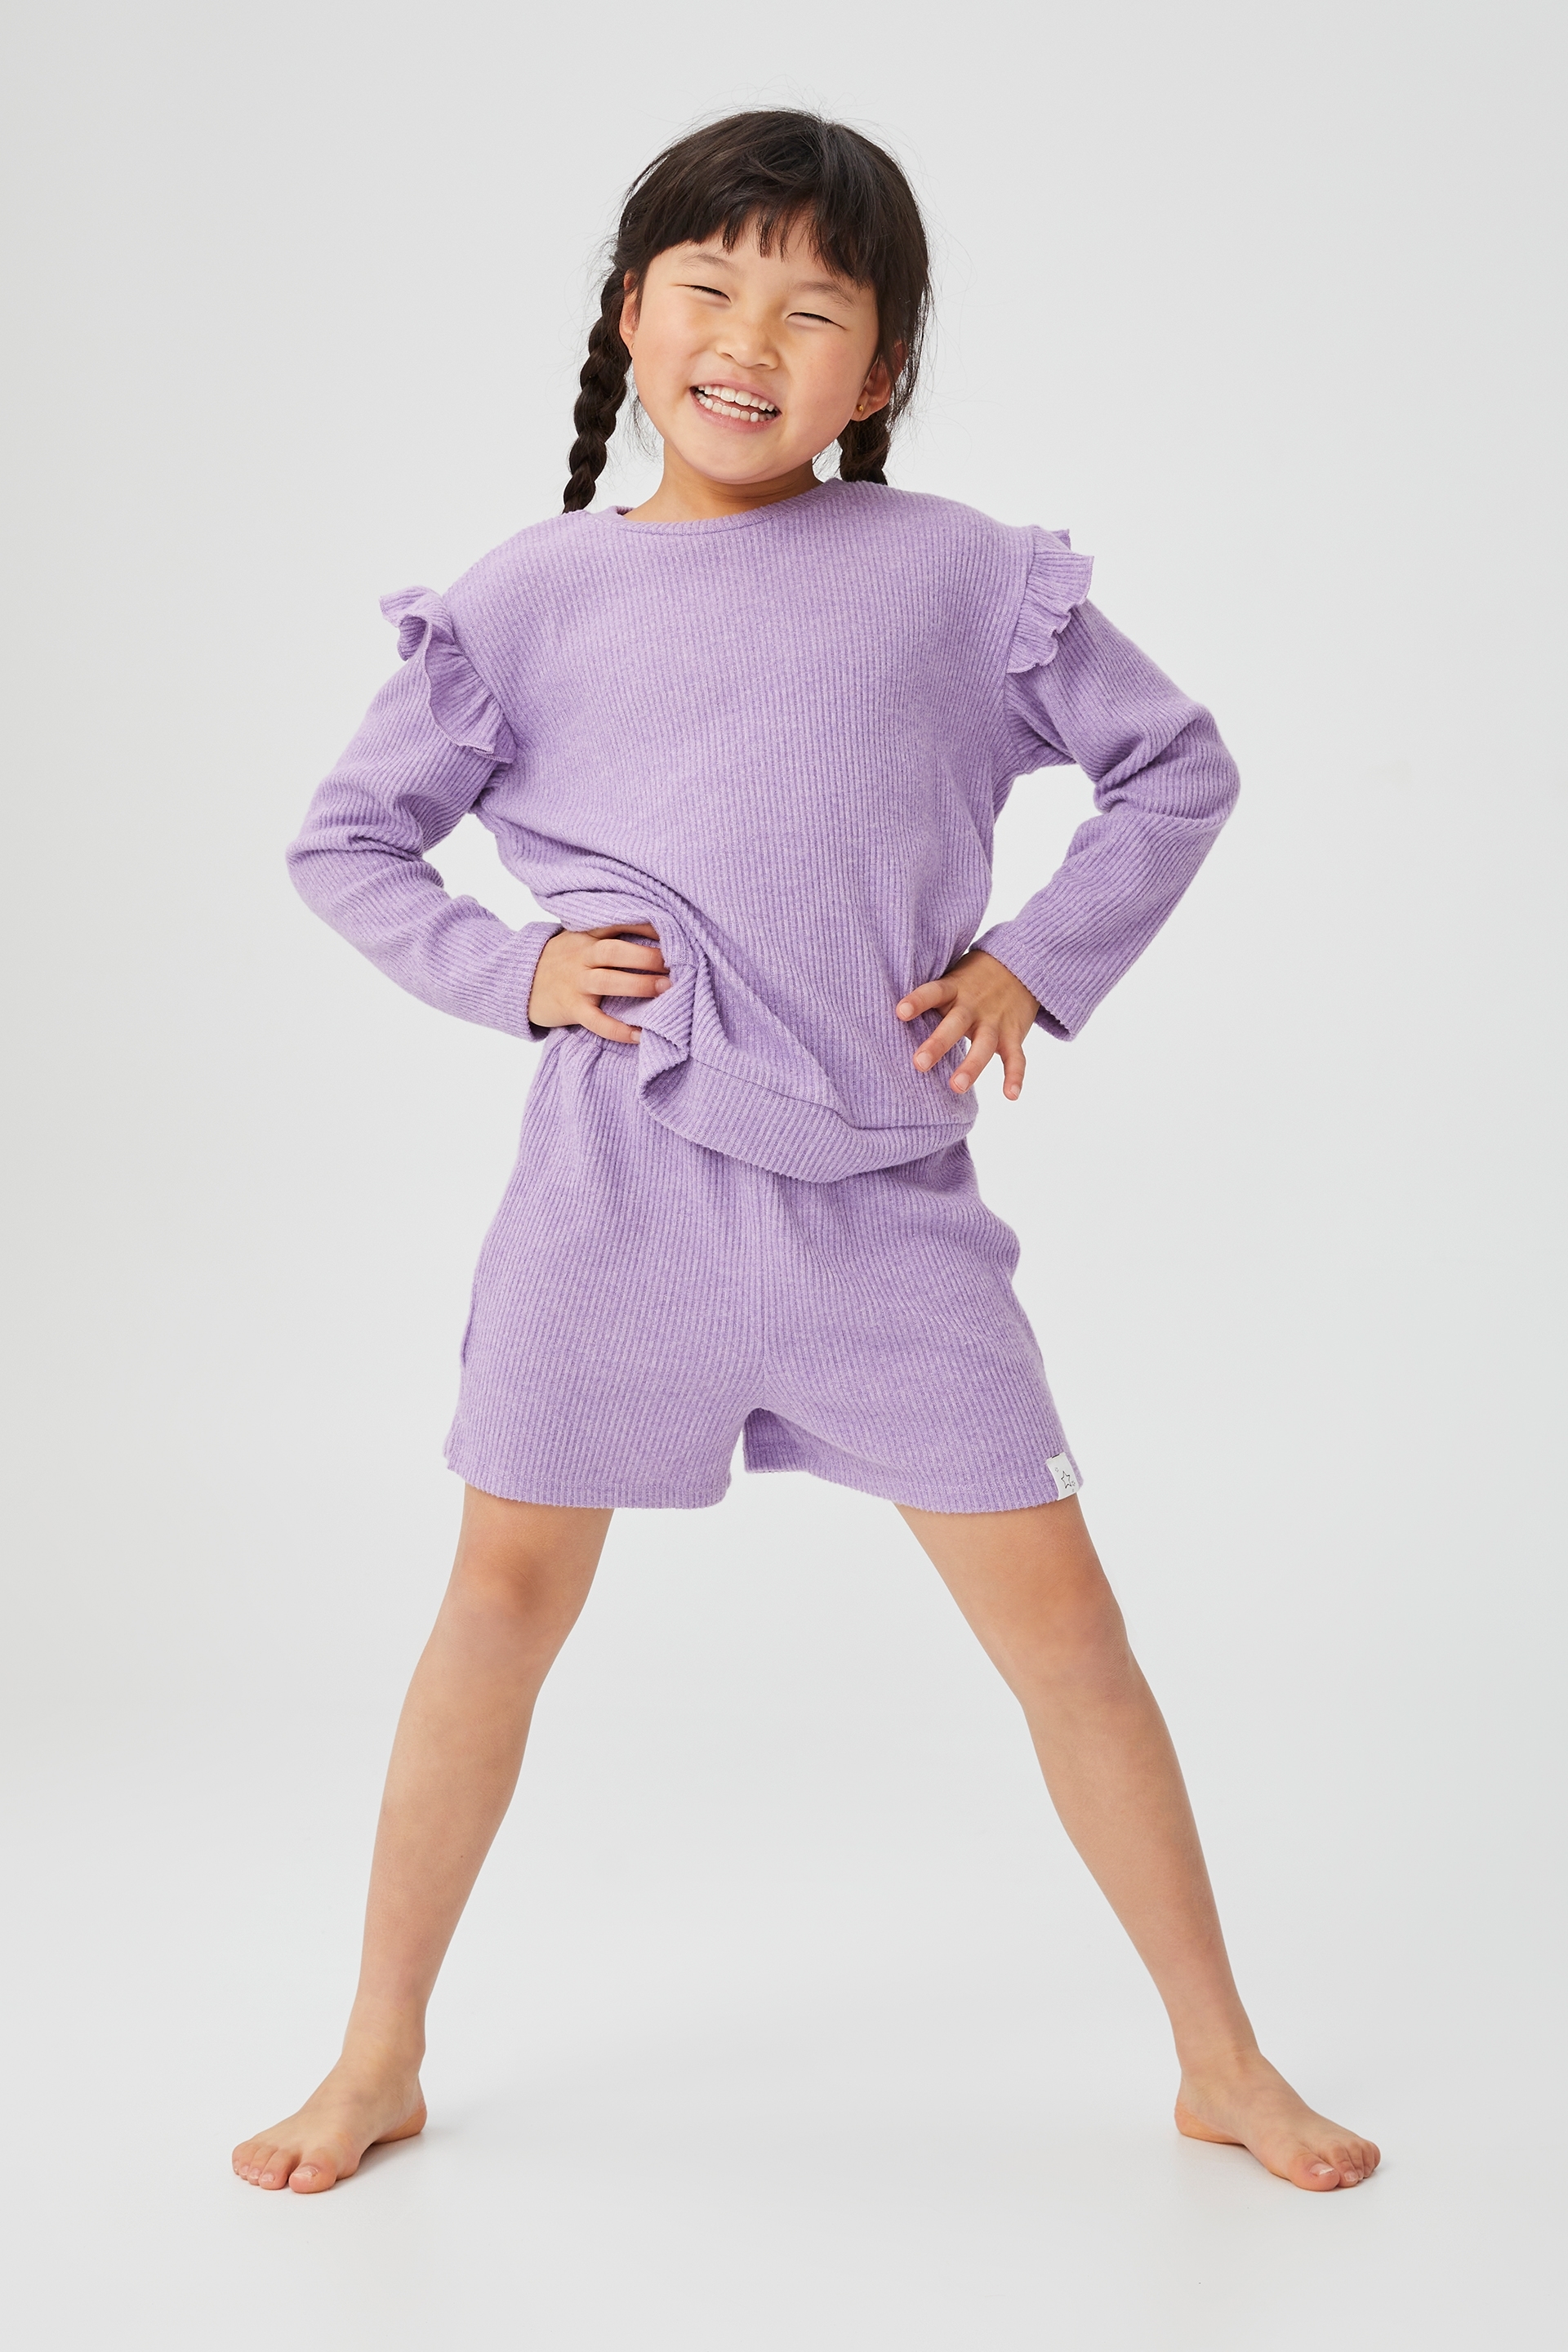 Cotton On Kids - Rosa Long Sleeve Pyjama Set - Grape soda marle